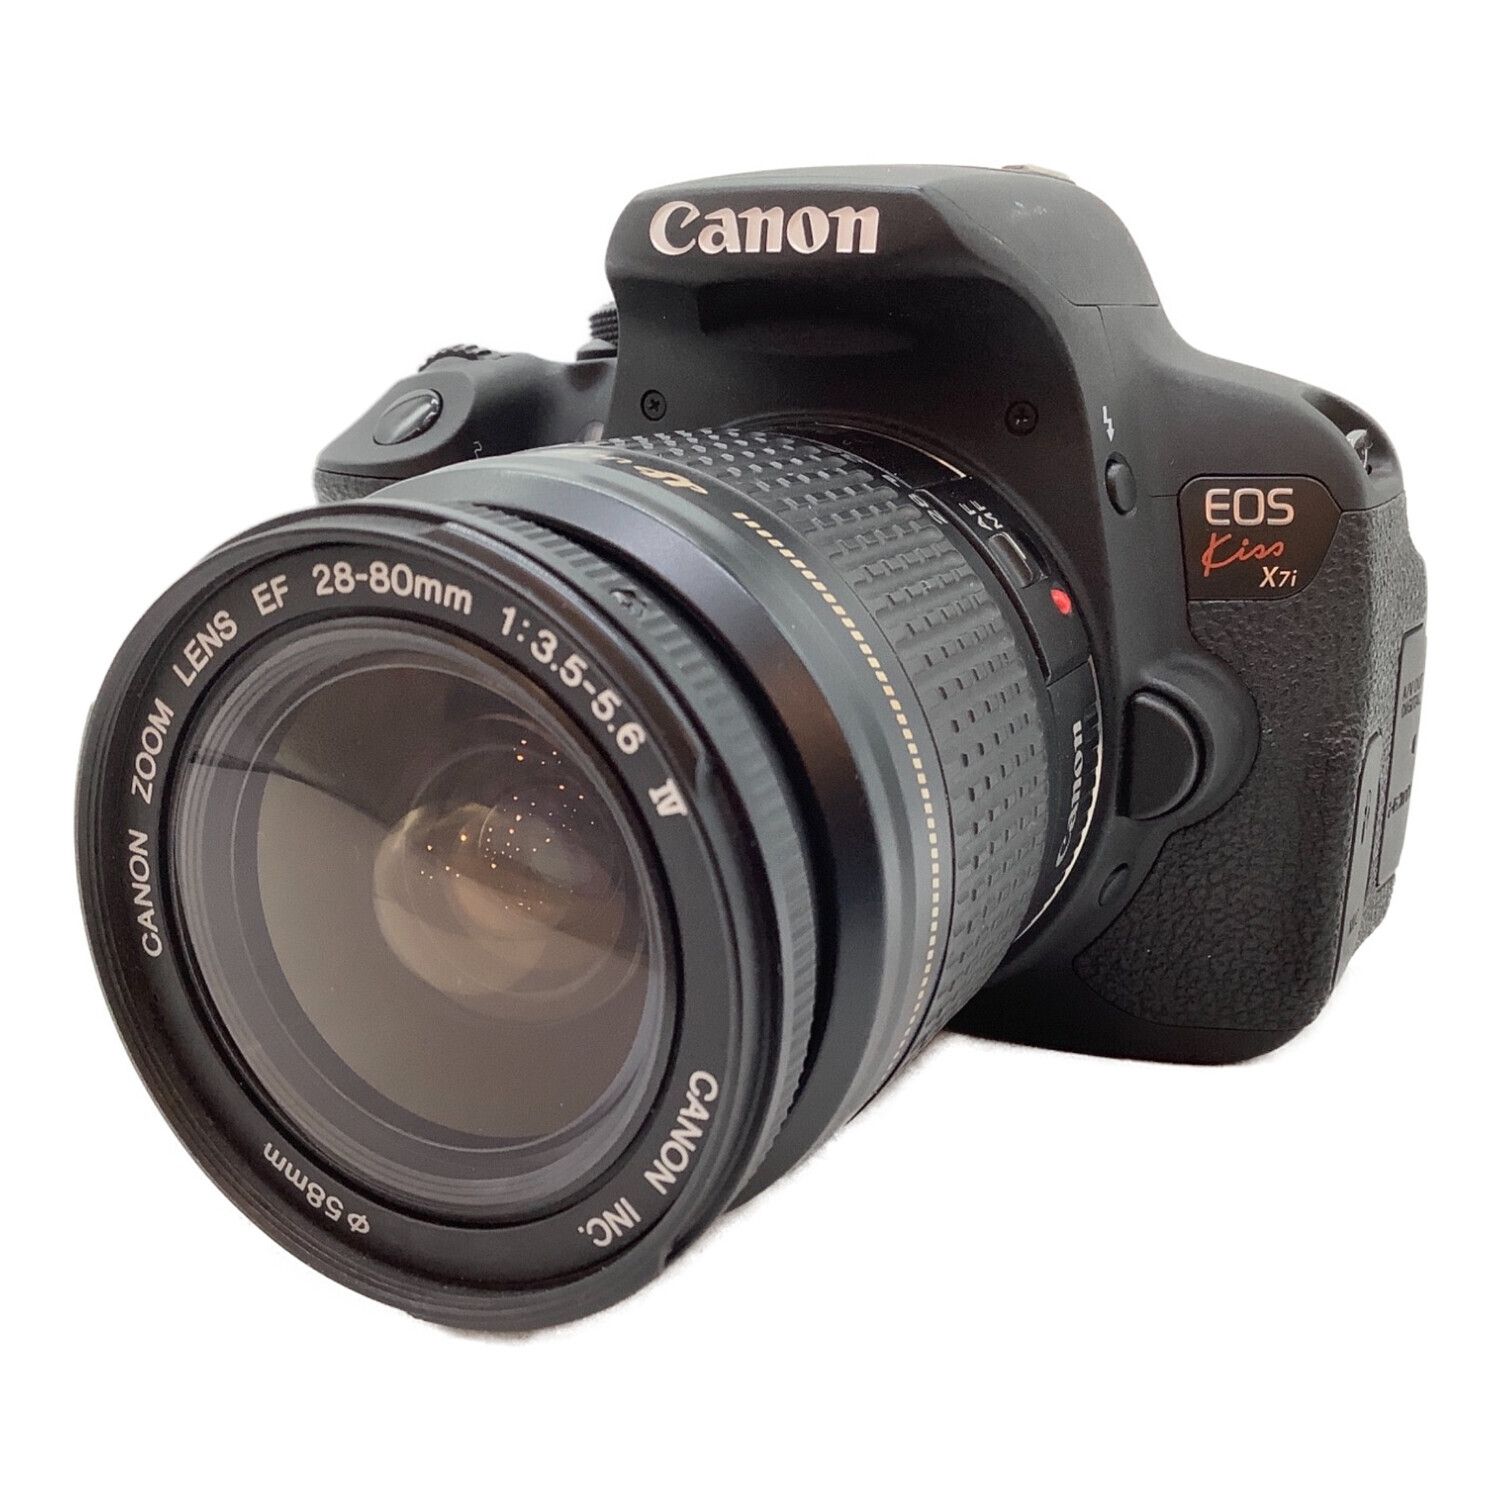 CANON (キャノン) デジタル一眼レフカメラ EOS kiss X7i レンズ